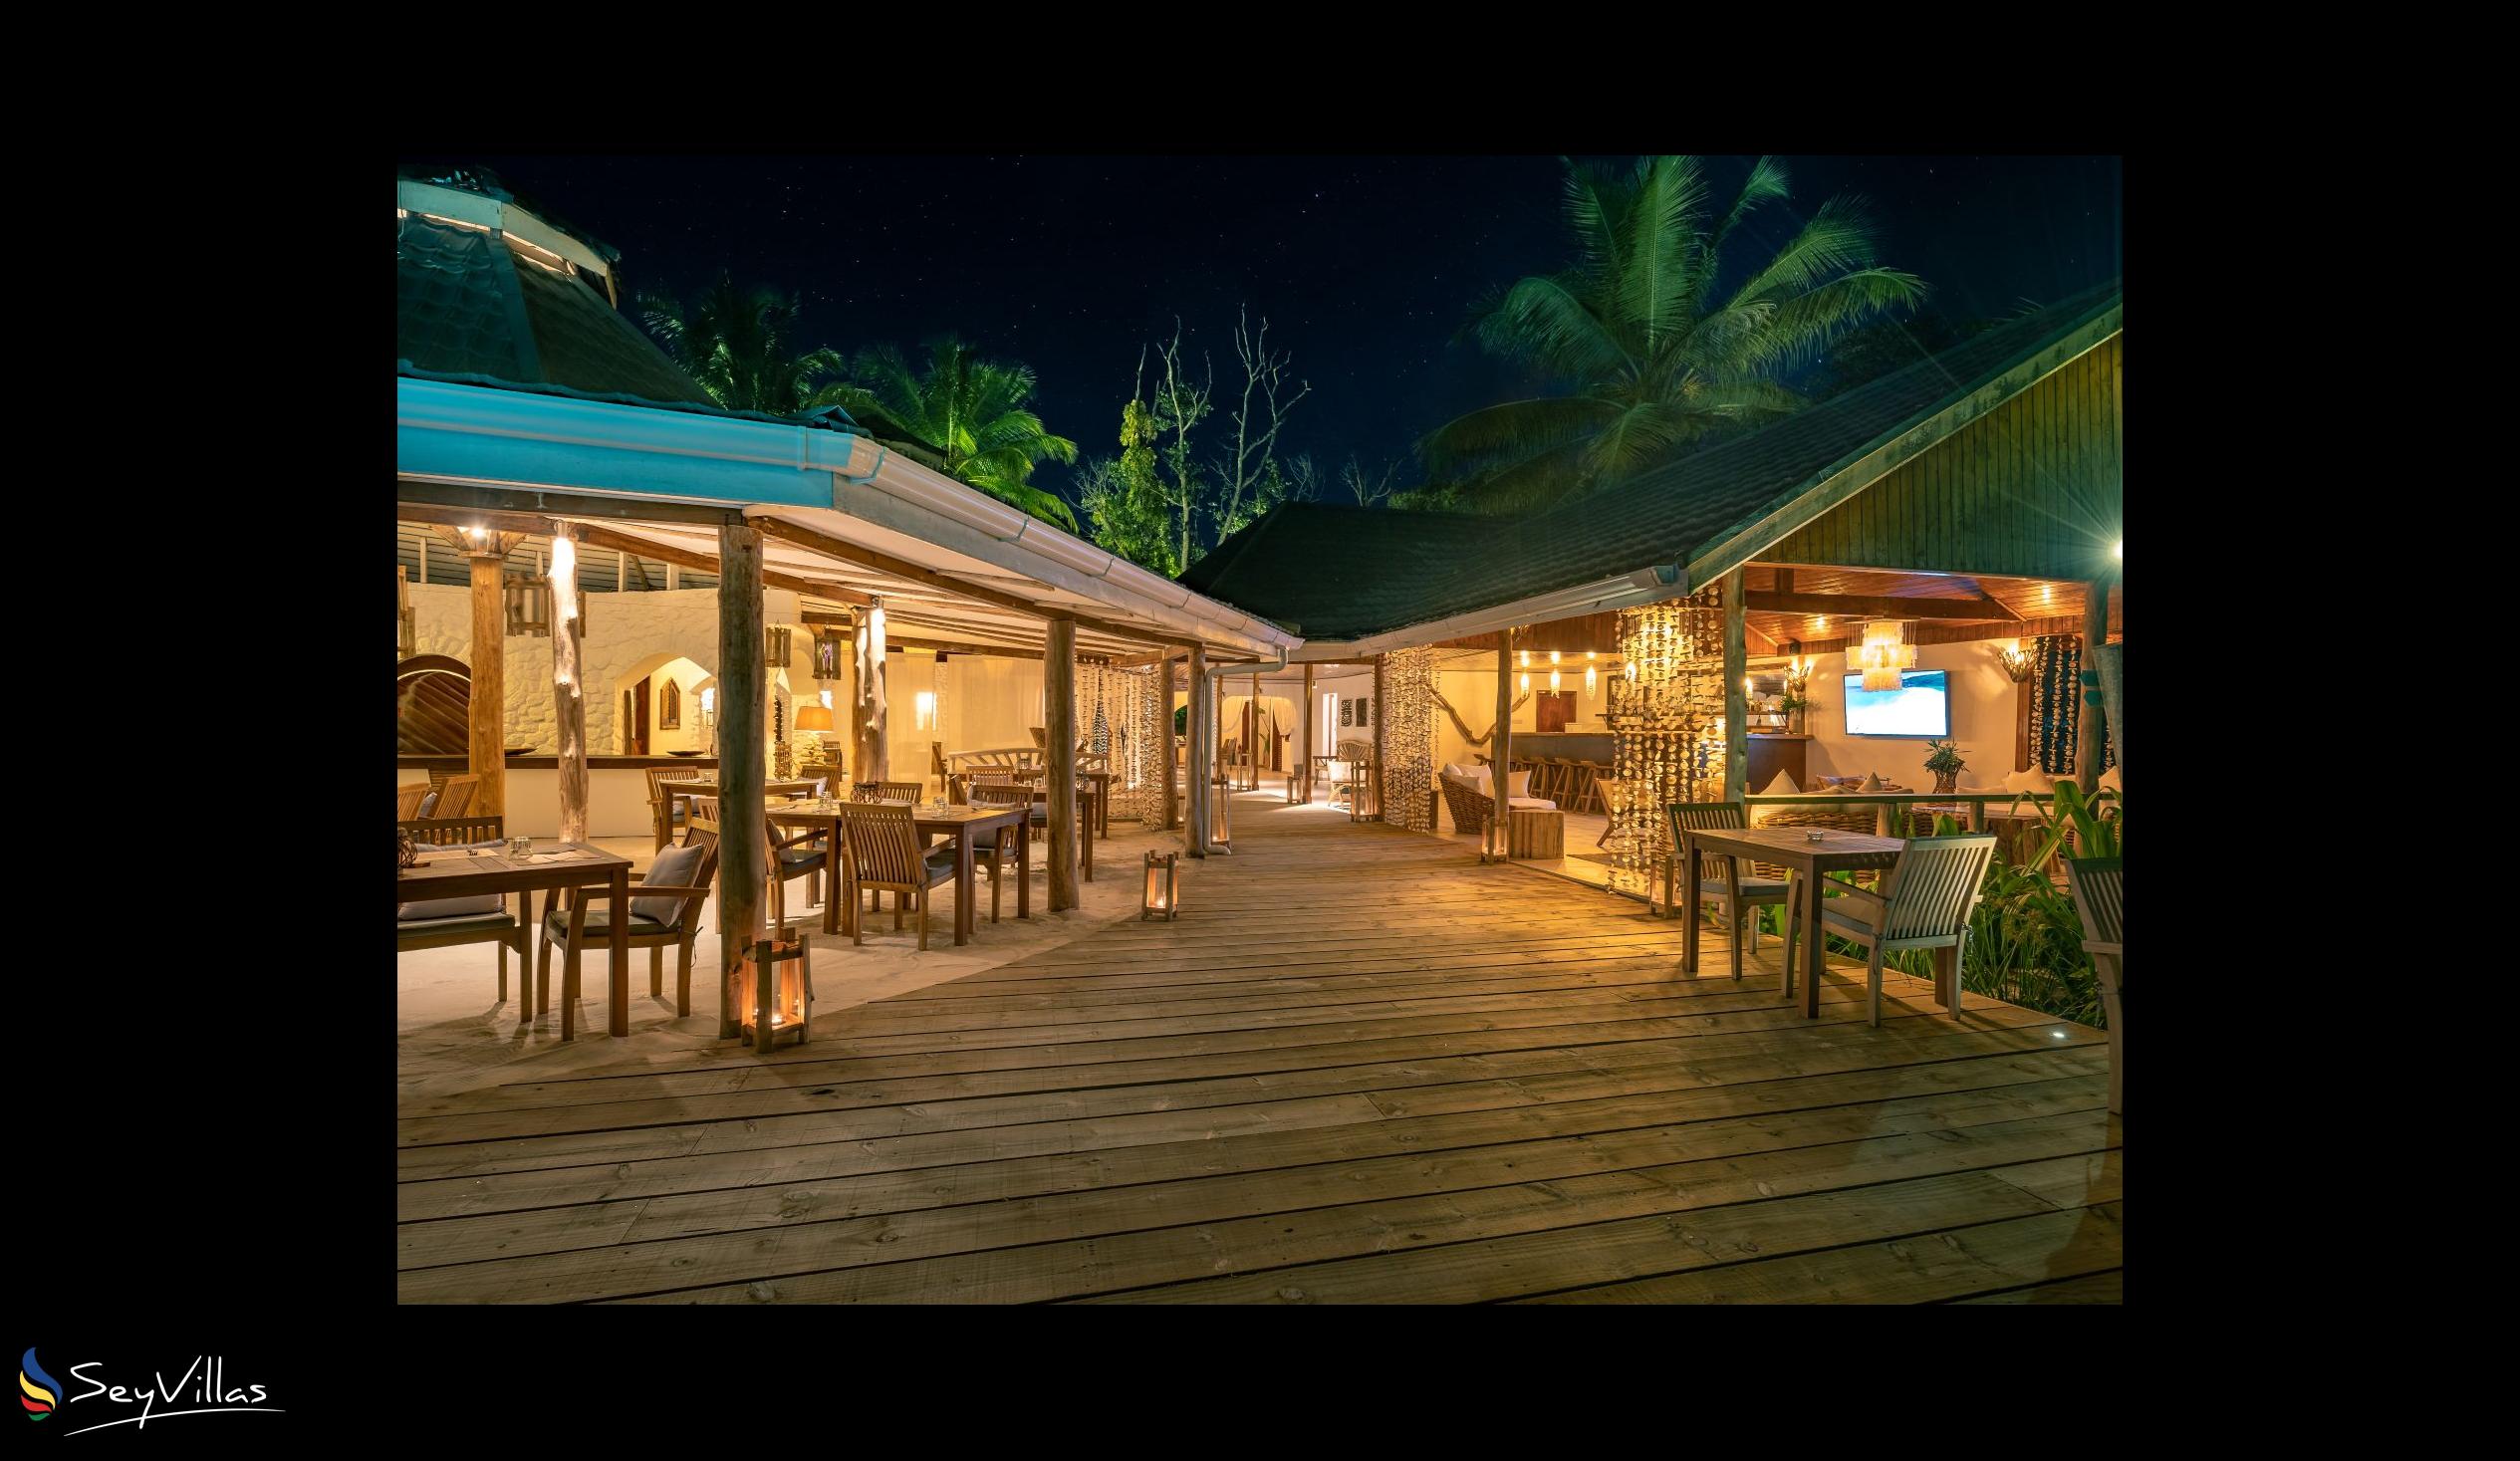 Photo 13: Bliss Hotel Praslin - Outdoor area - Praslin (Seychelles)